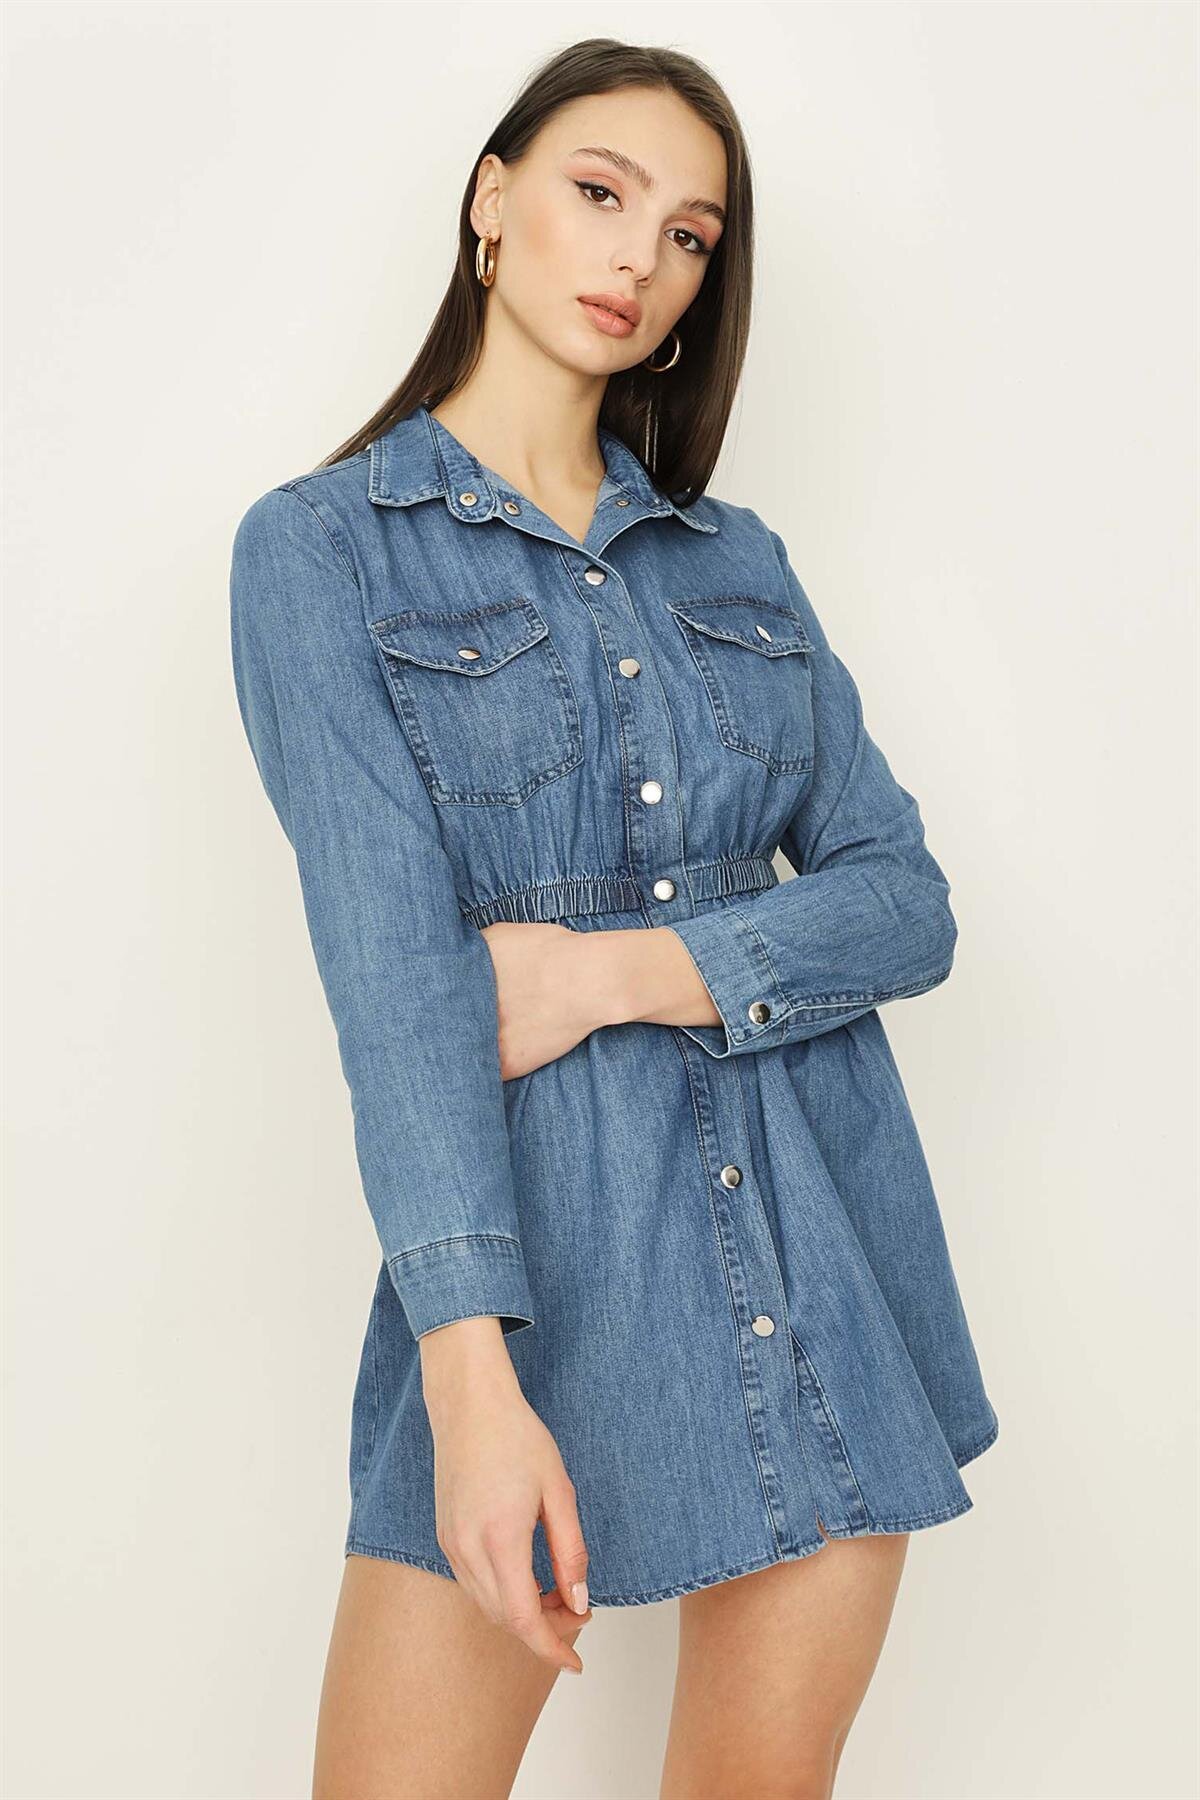 Select Moda Mavi Beli Lastikli Mini Kot Elbise